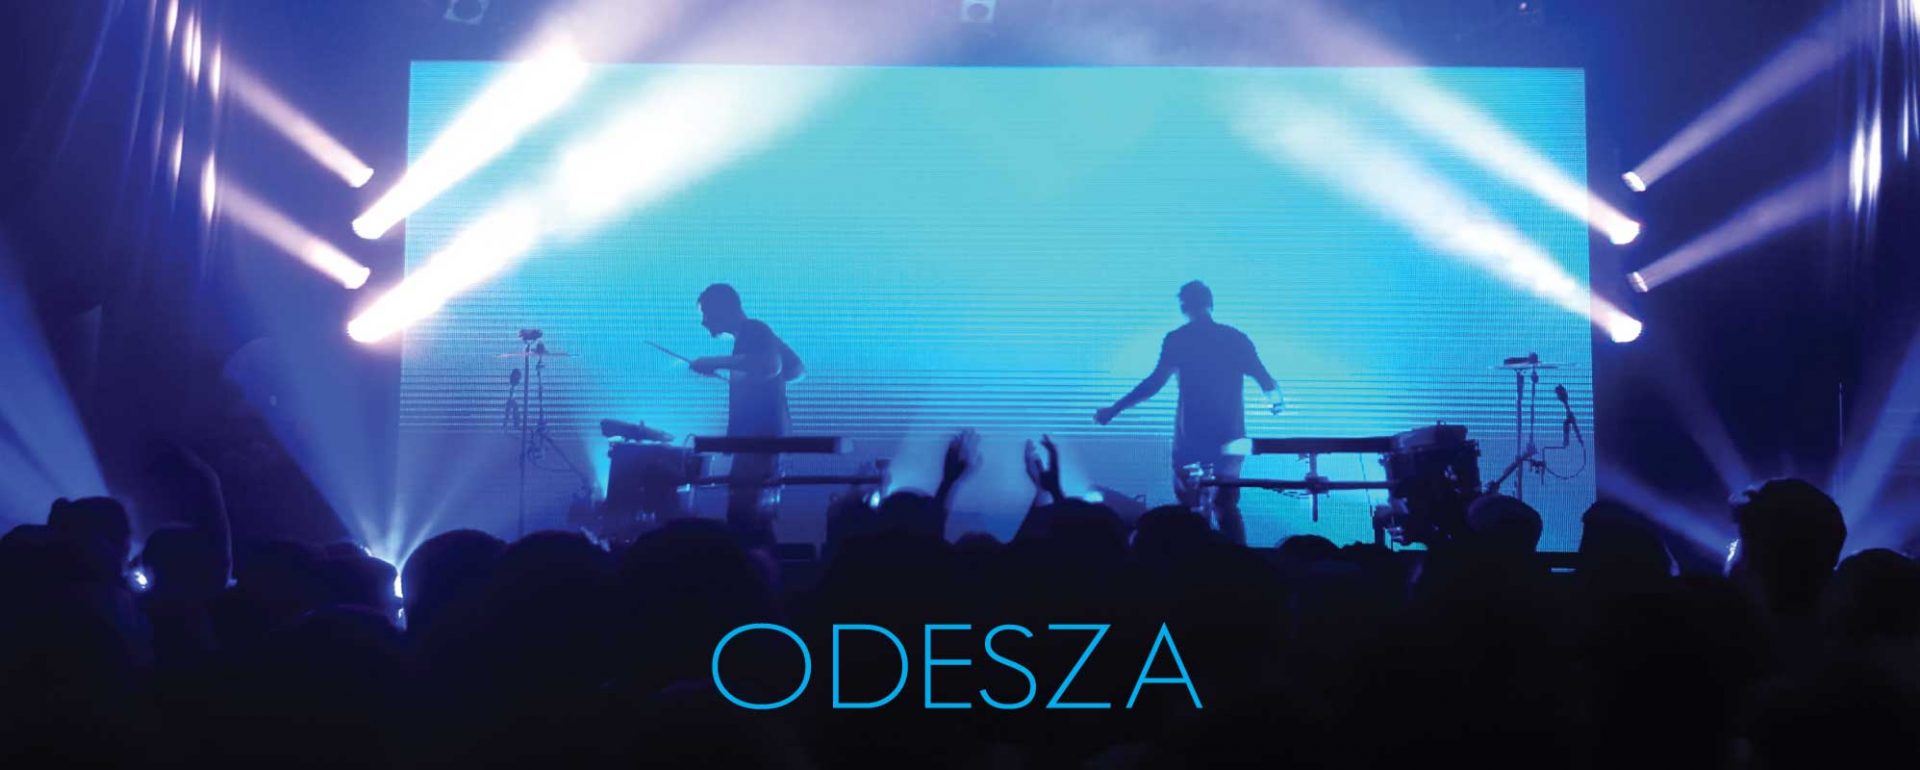 Odesza Concert